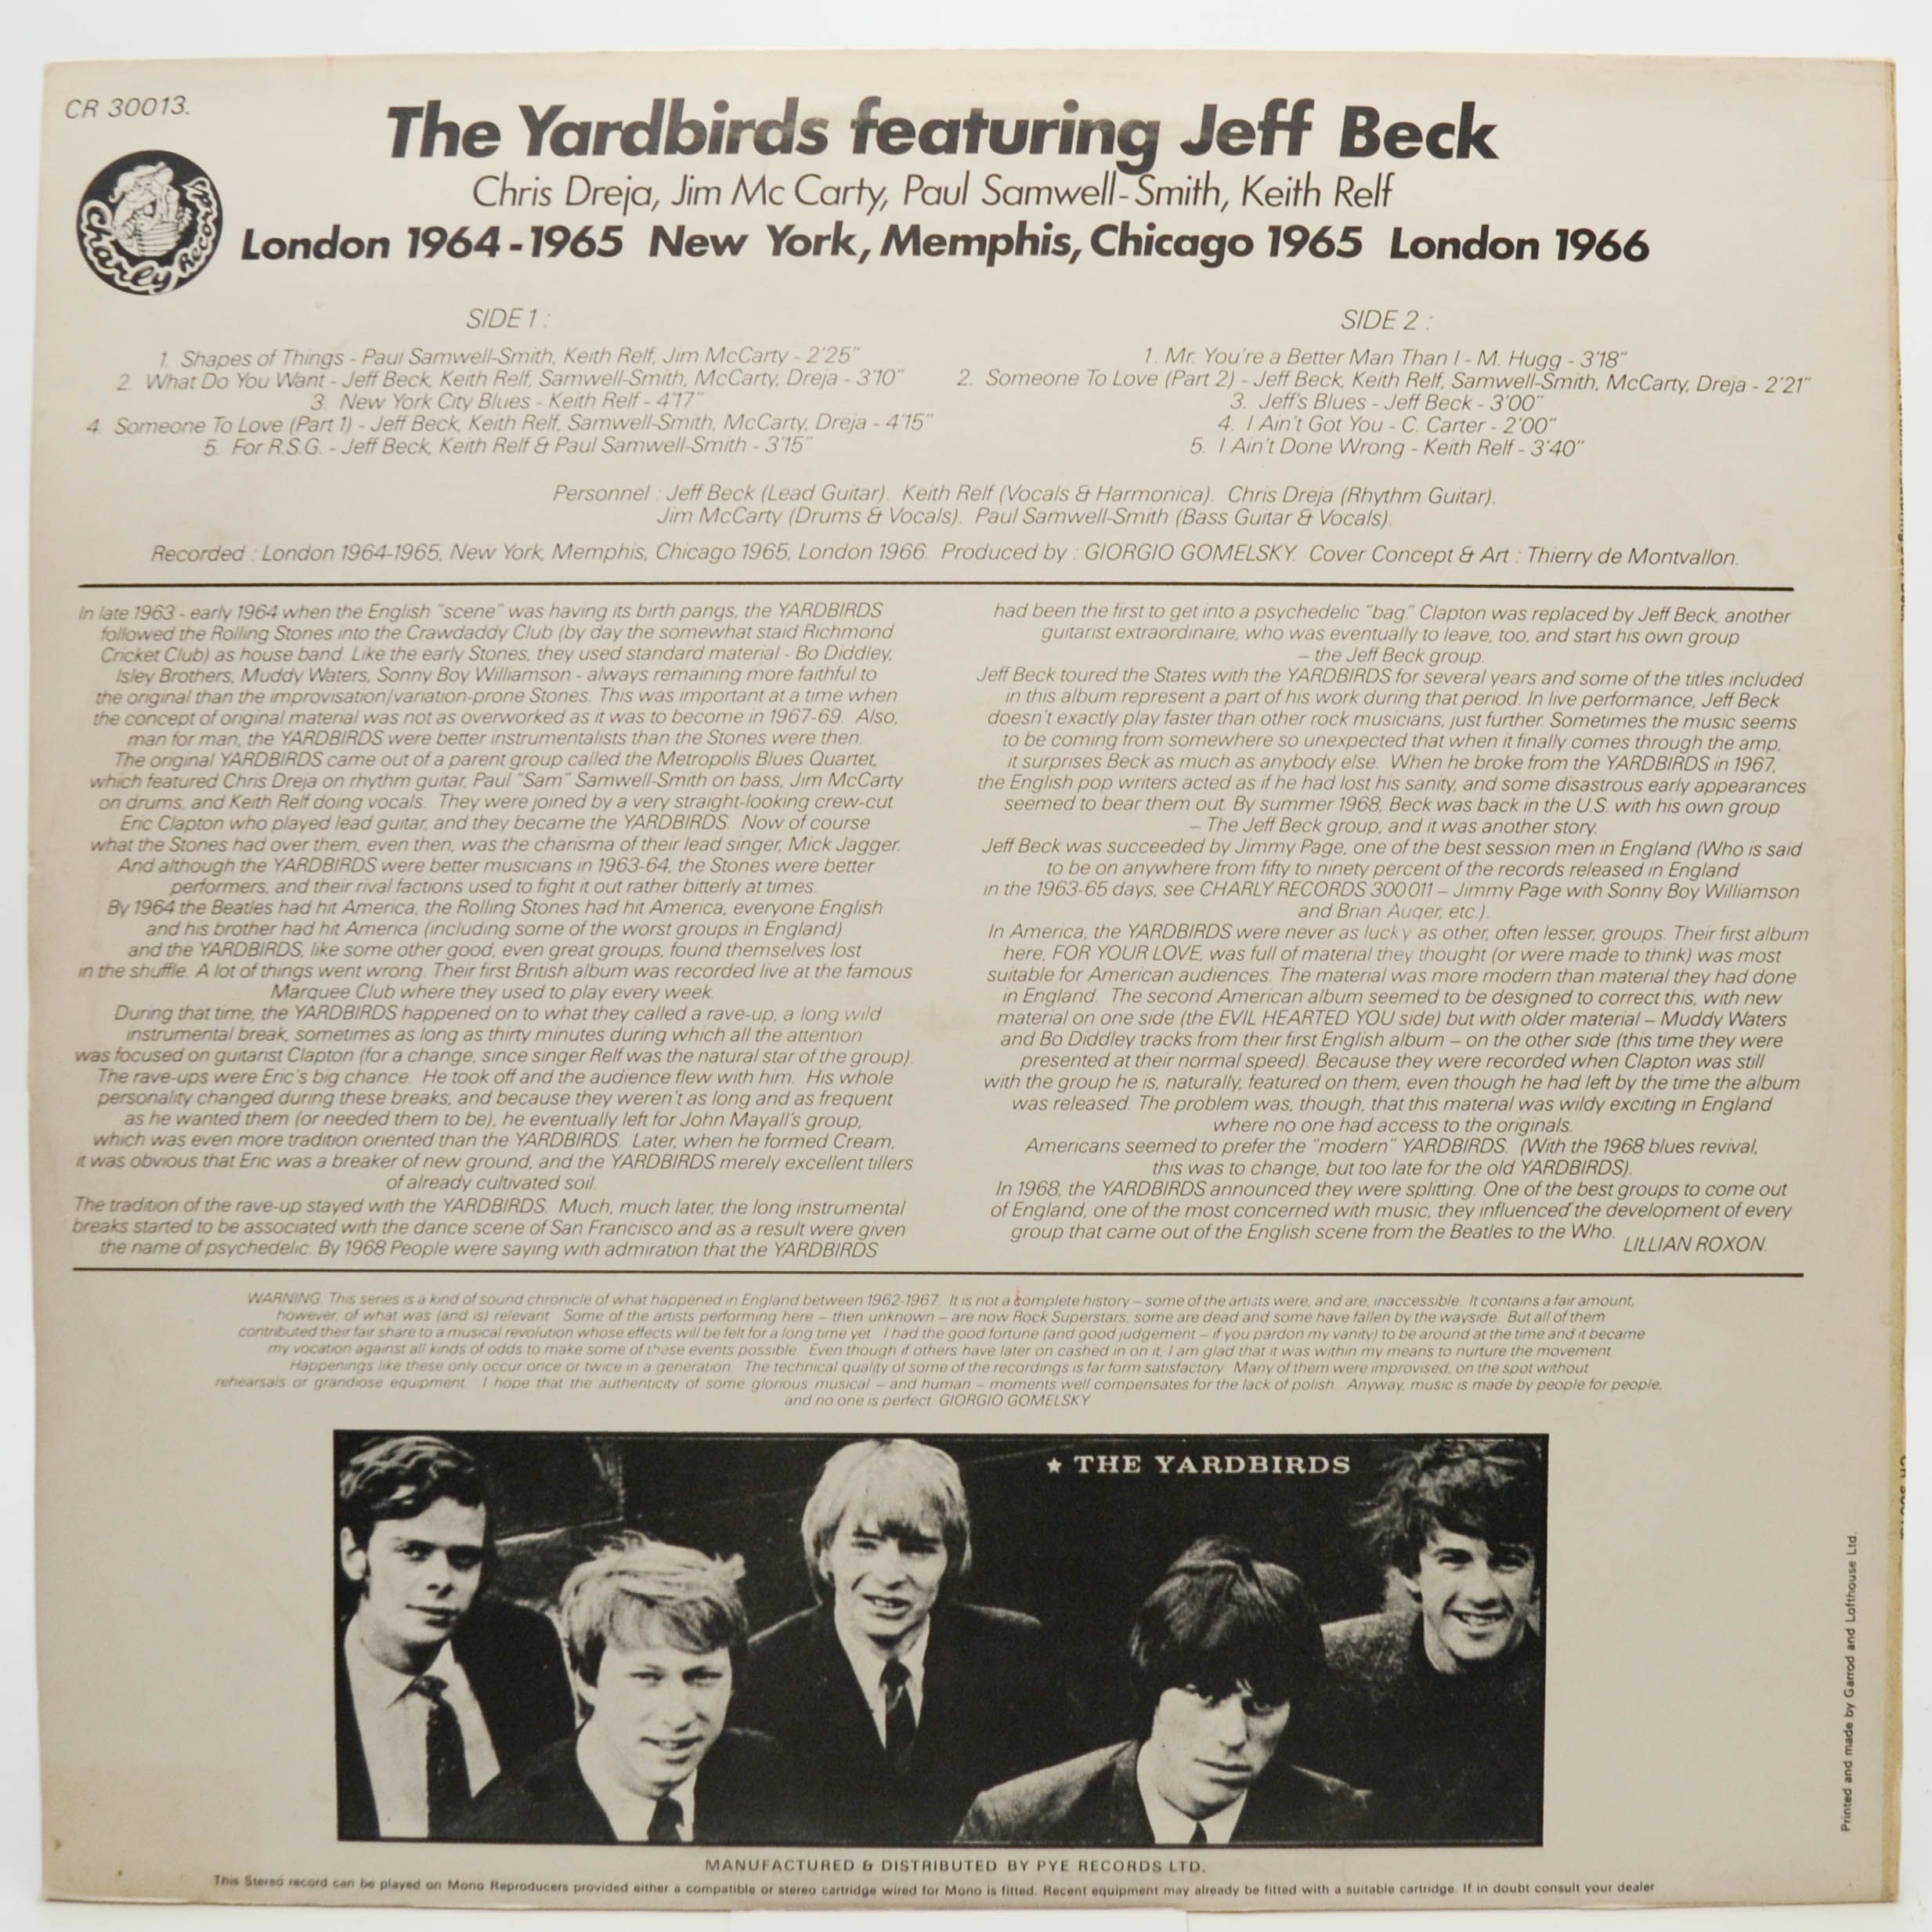 Yardbirds Featuring Jeff Beck — The Yardbirds Featuring Jeff Beck (UK), 1977